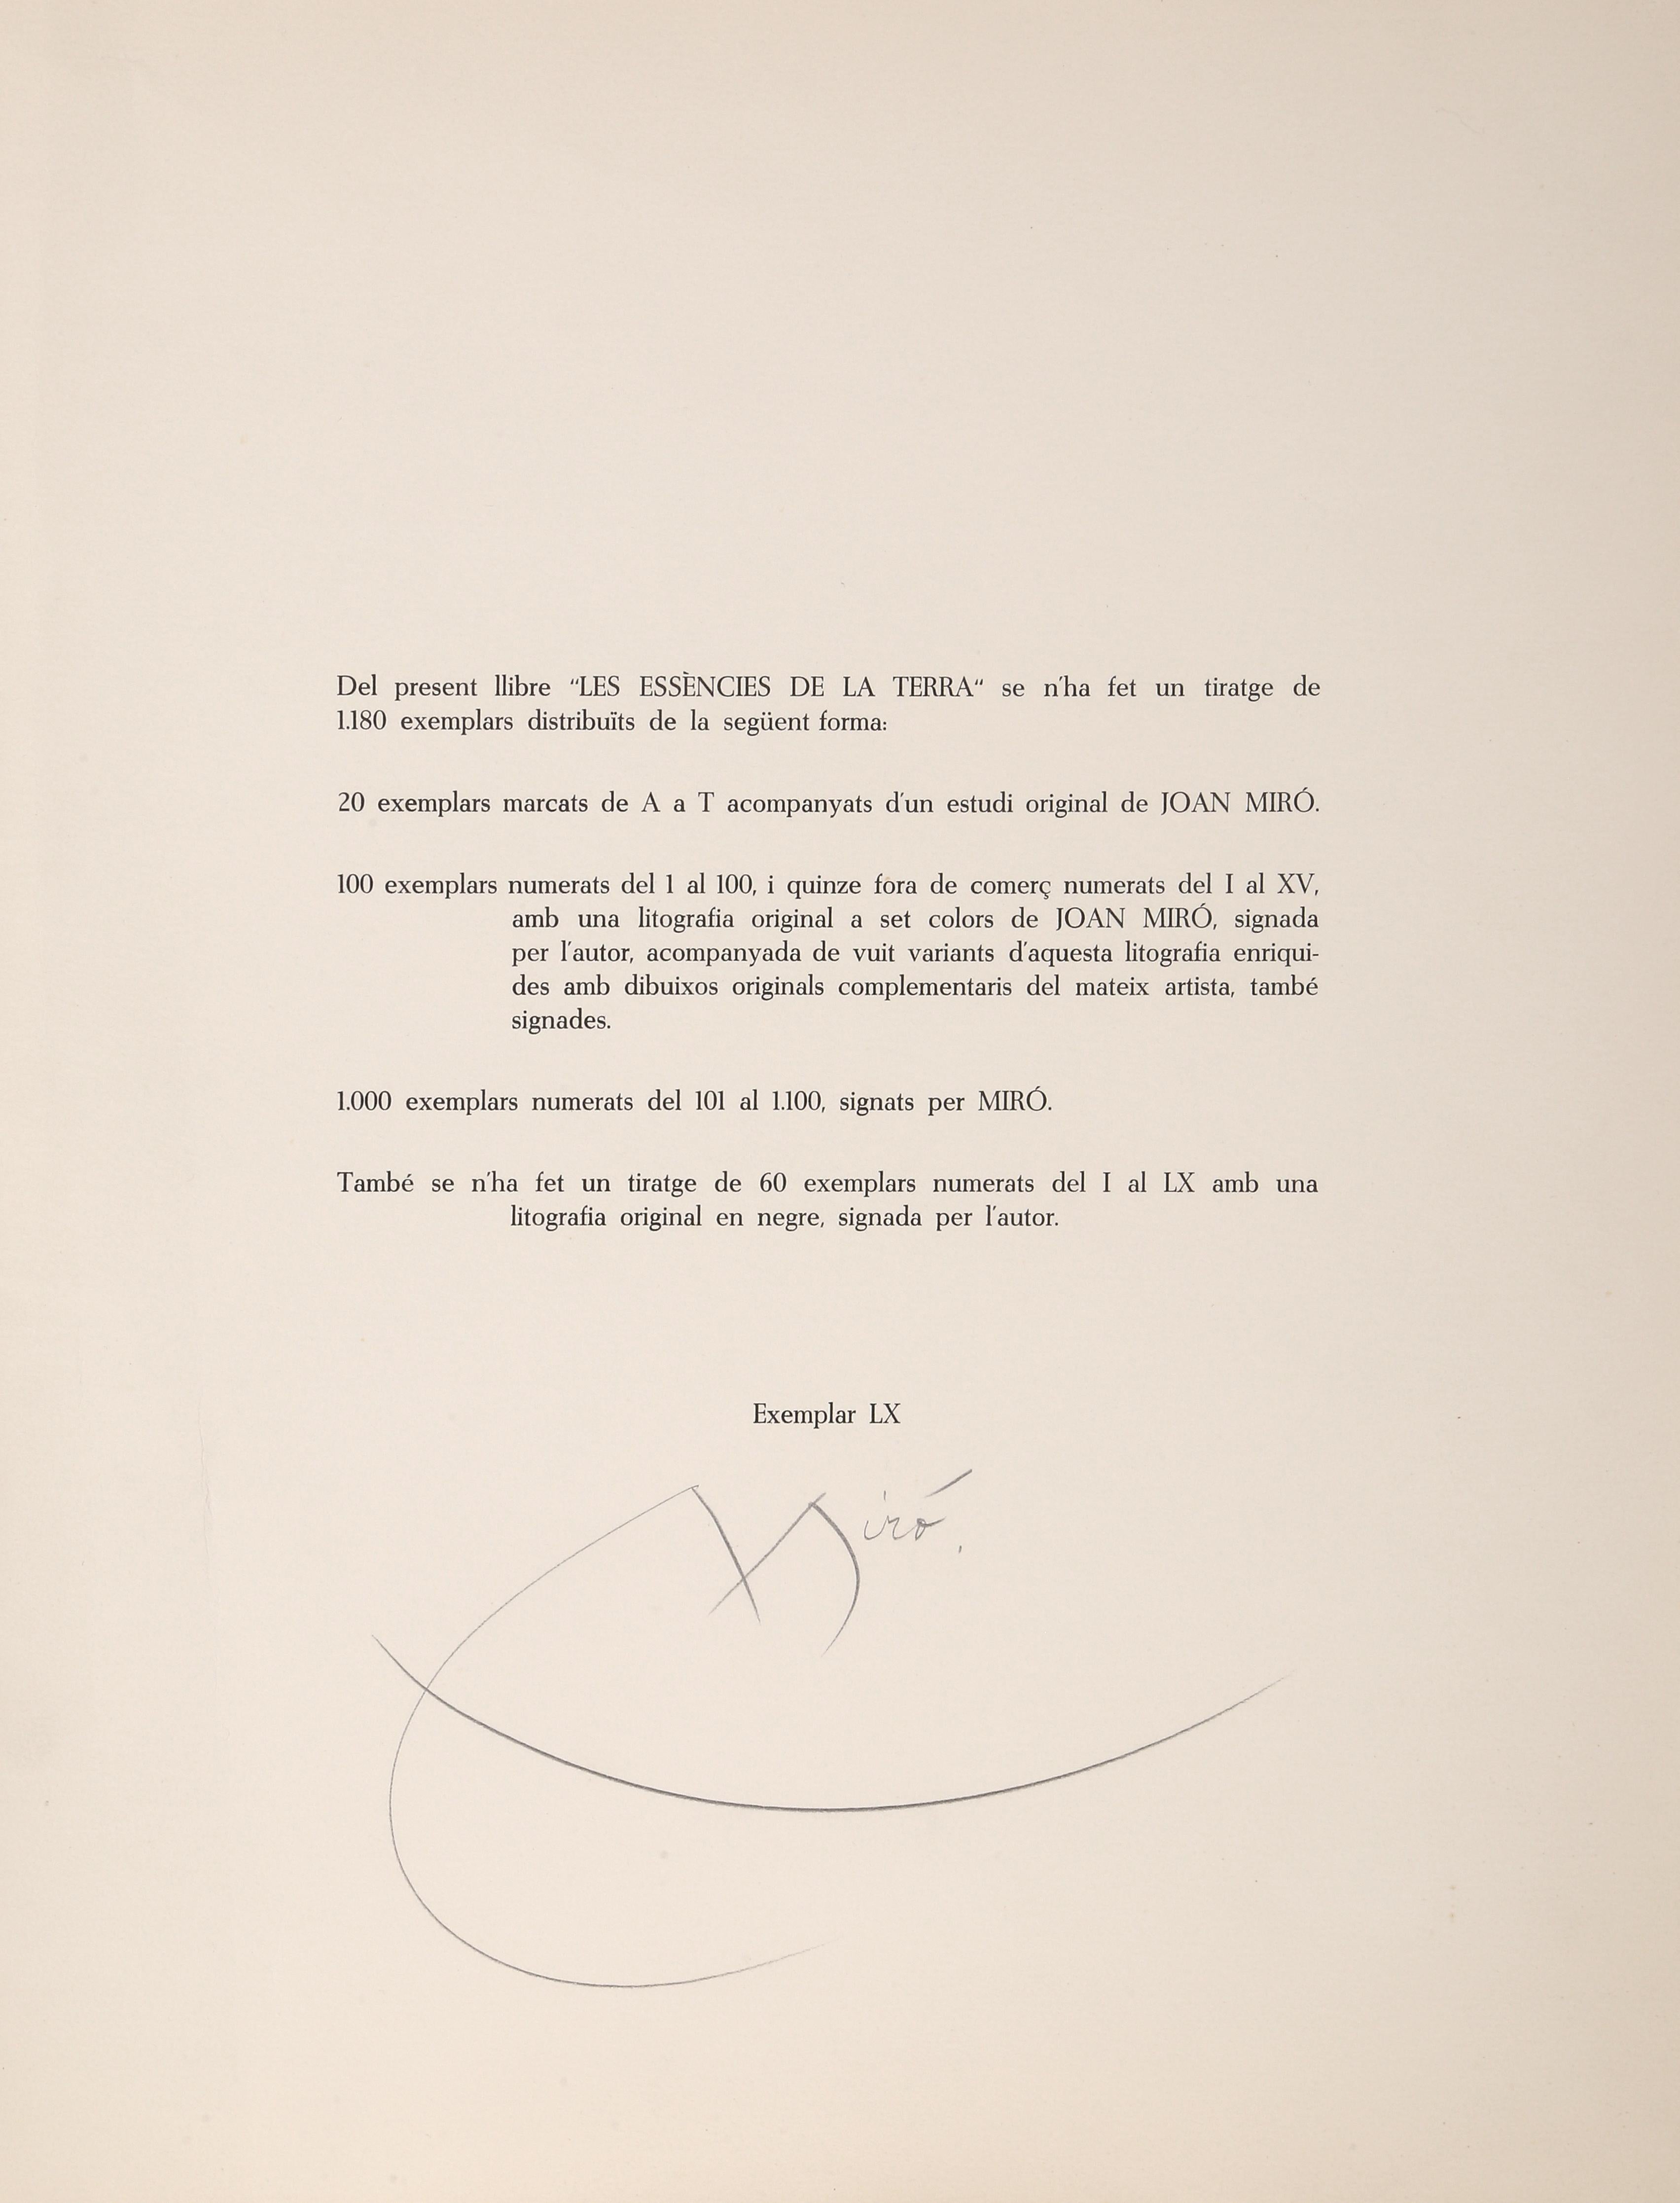 Artist: Joan Miro, Spanish (1893 - 1983)
Title: Les Essencies de la Tierra
Year: 1968
Medium: Lithograph on Guarro
Edition: LX (60)
Size: 19.25 x 15.25 in. (48.9 x 38.74 cm)
Frame Size: 27 x 23 inches

Reference: no. 123 in Cramer 